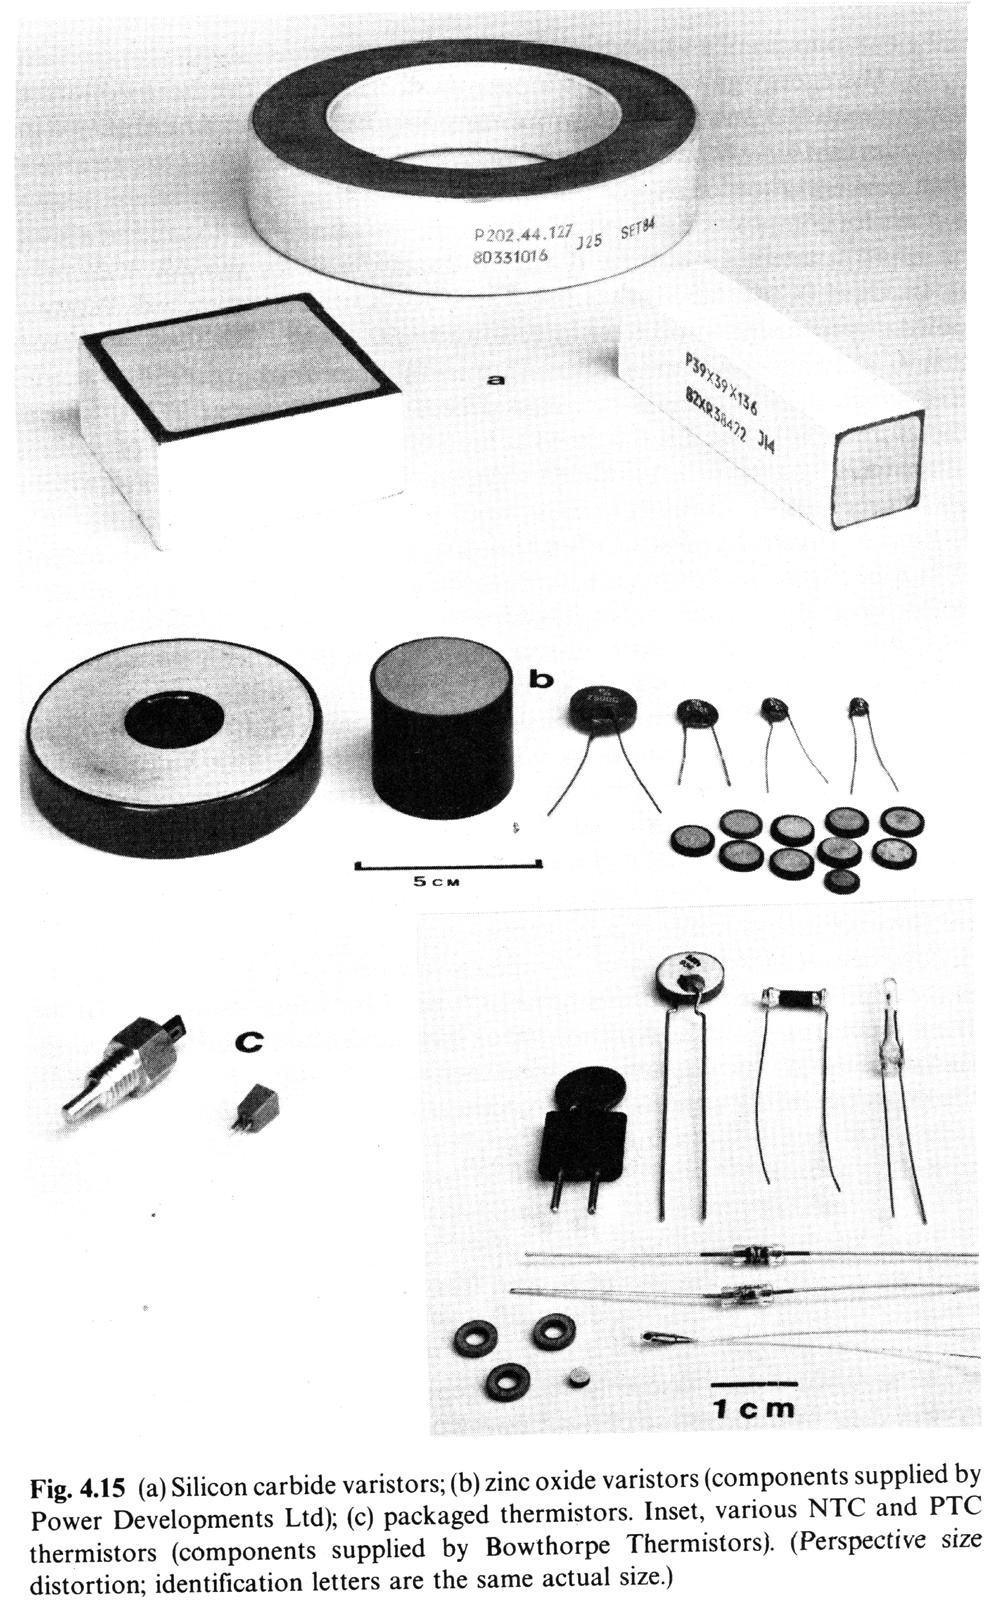 7 Examples of Varistor